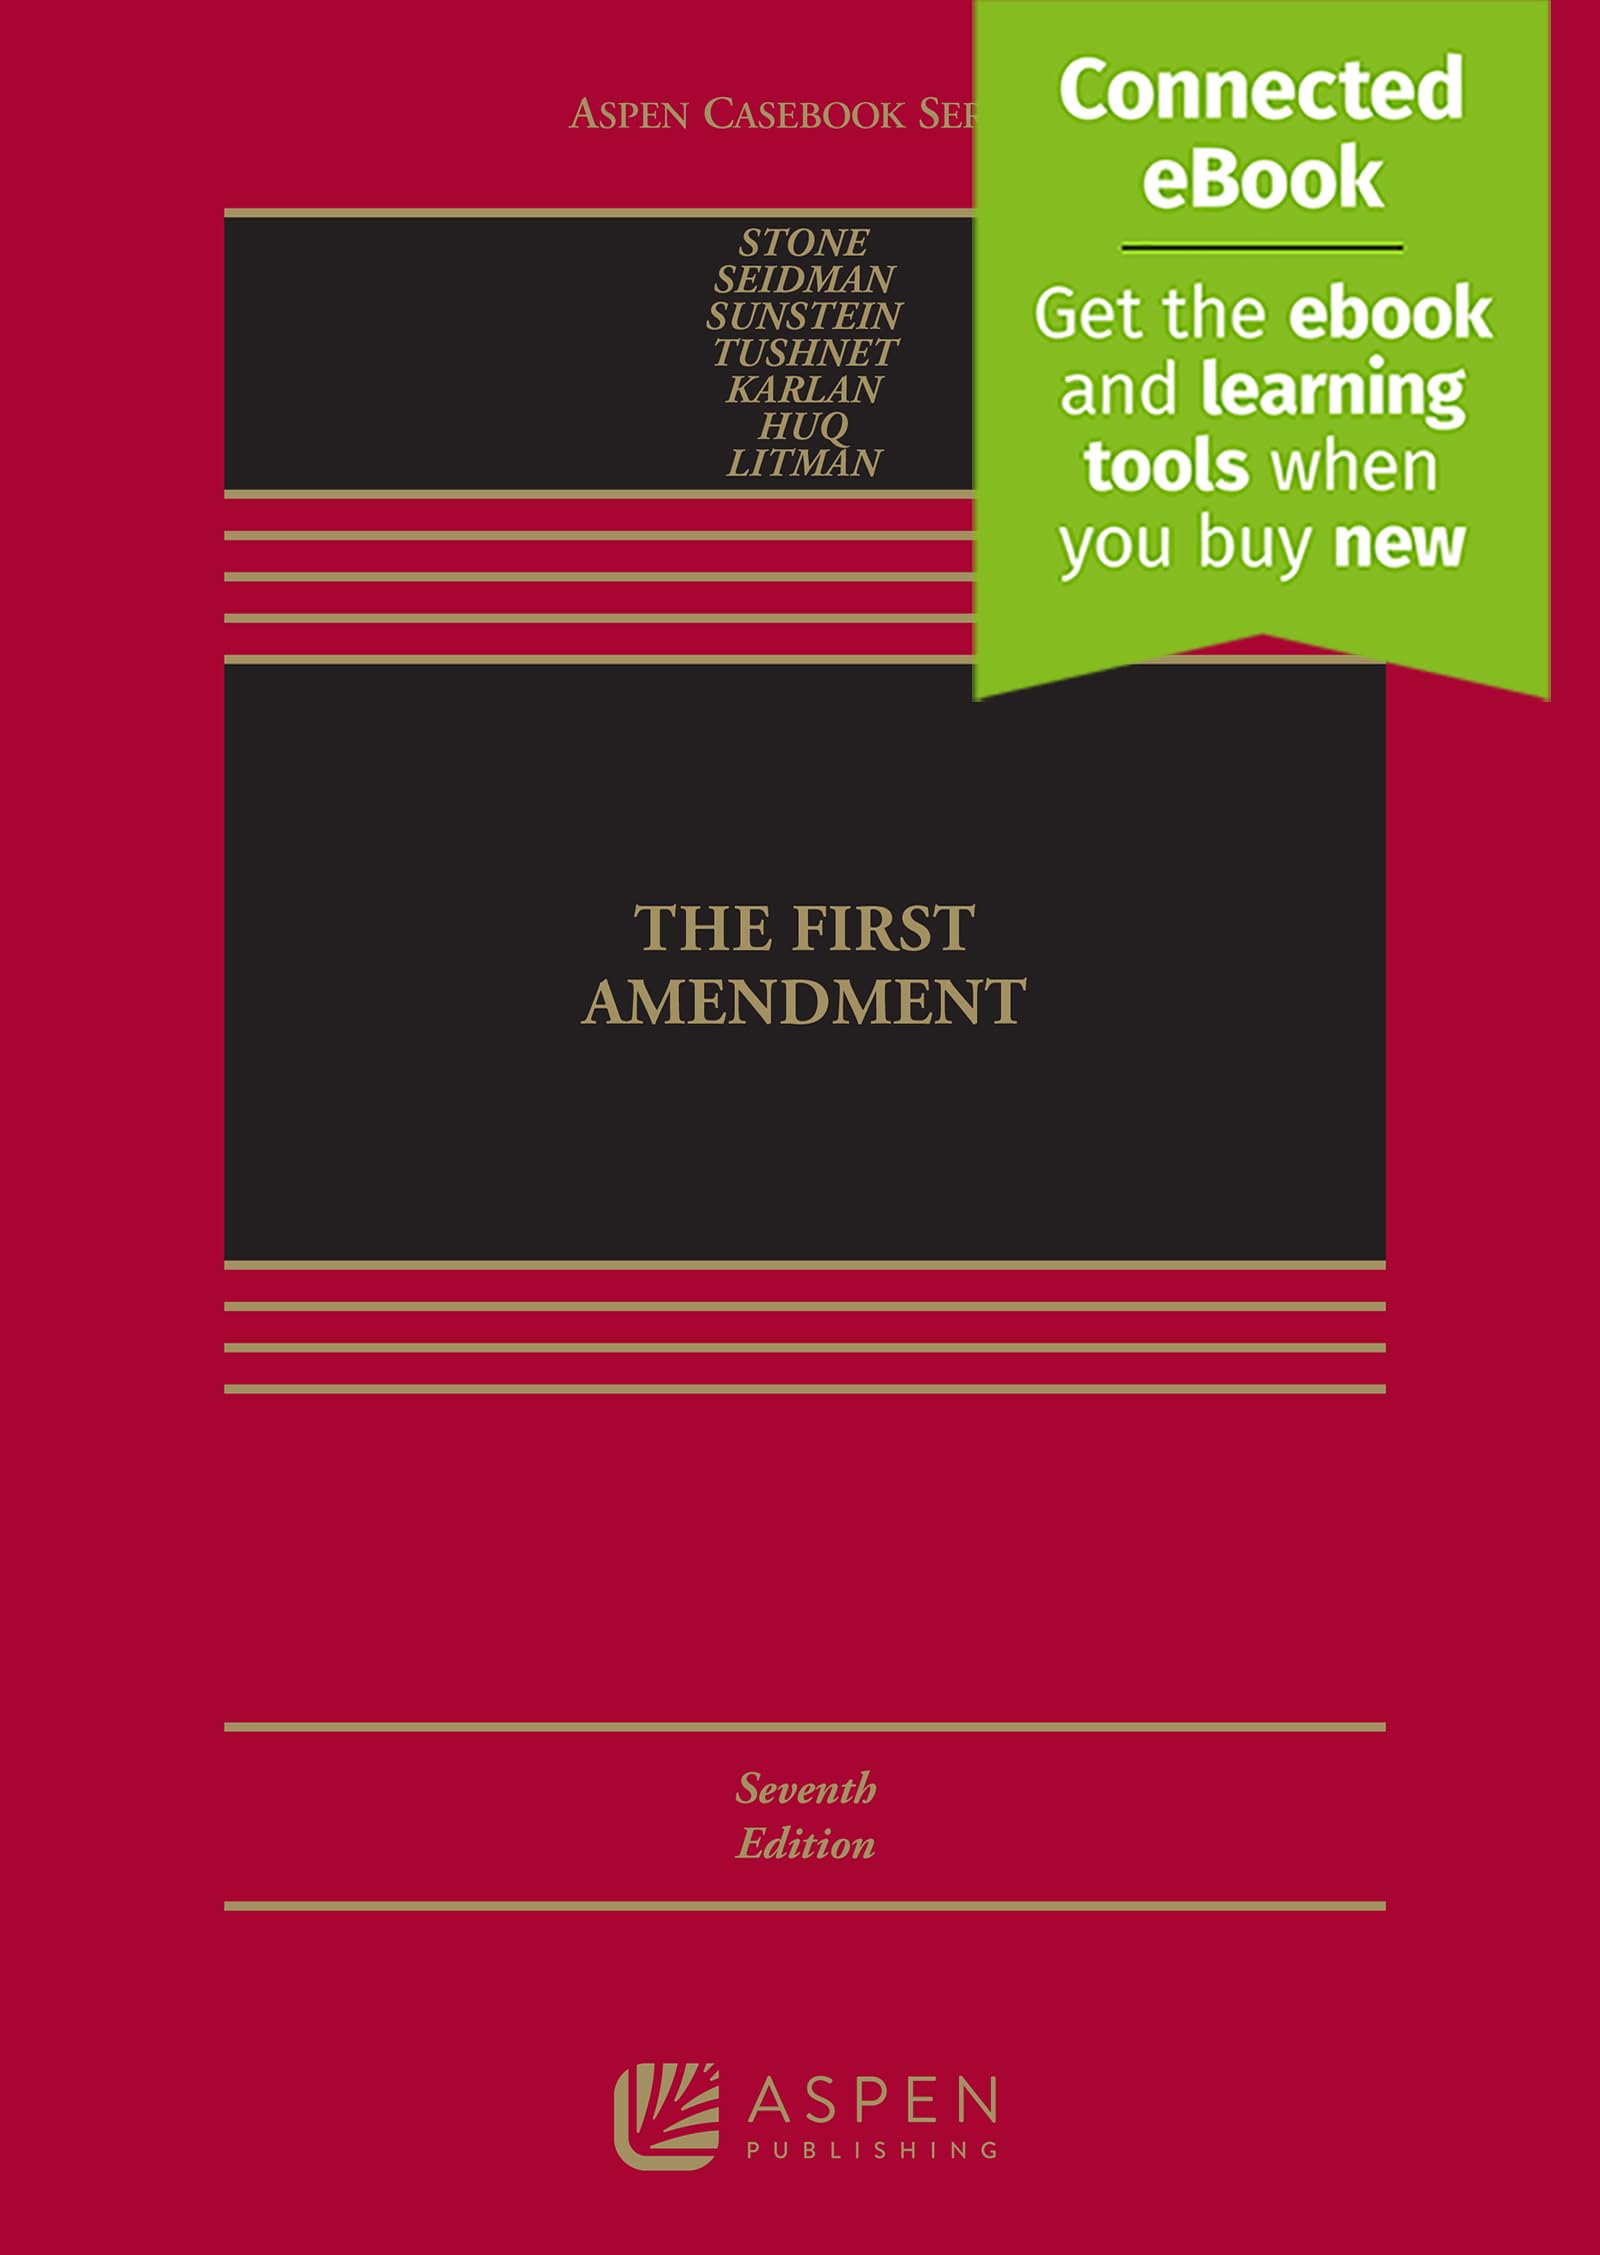 The First Amendment: [Connected Ebook] (Aspen Casebook) (Aspen Casebook Series)